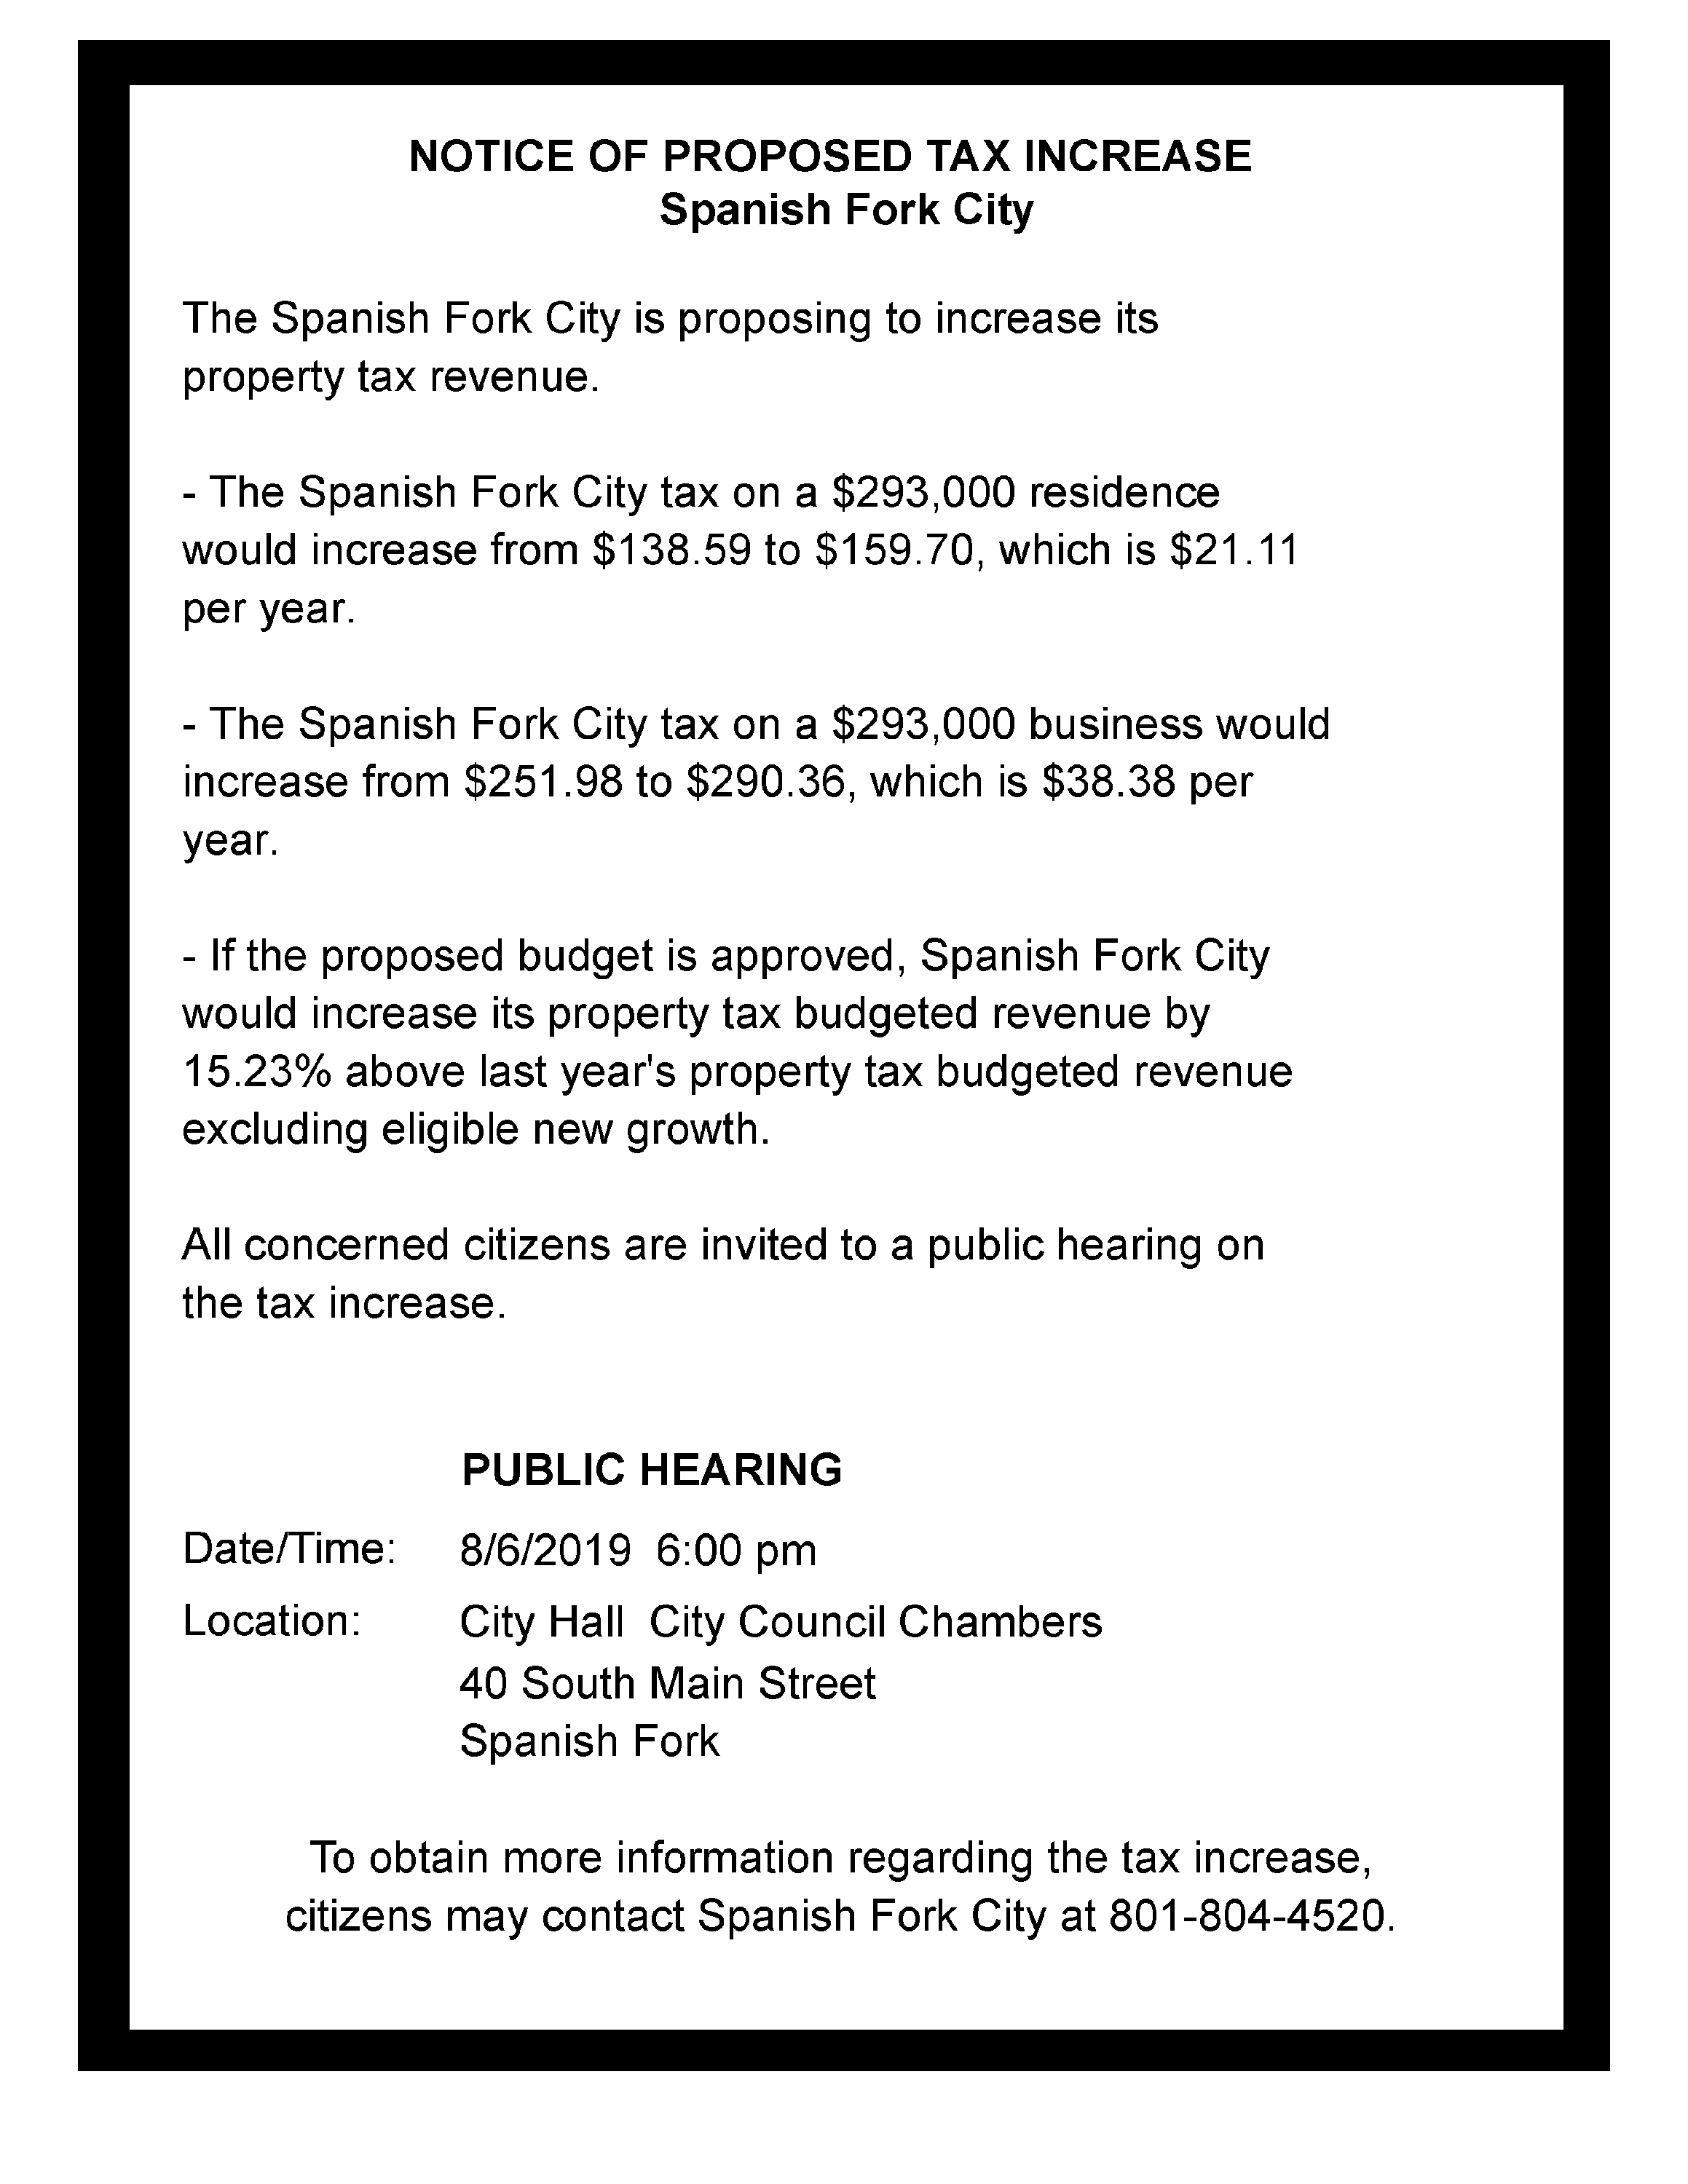 Flyer for Public Hearing regarding tax increase